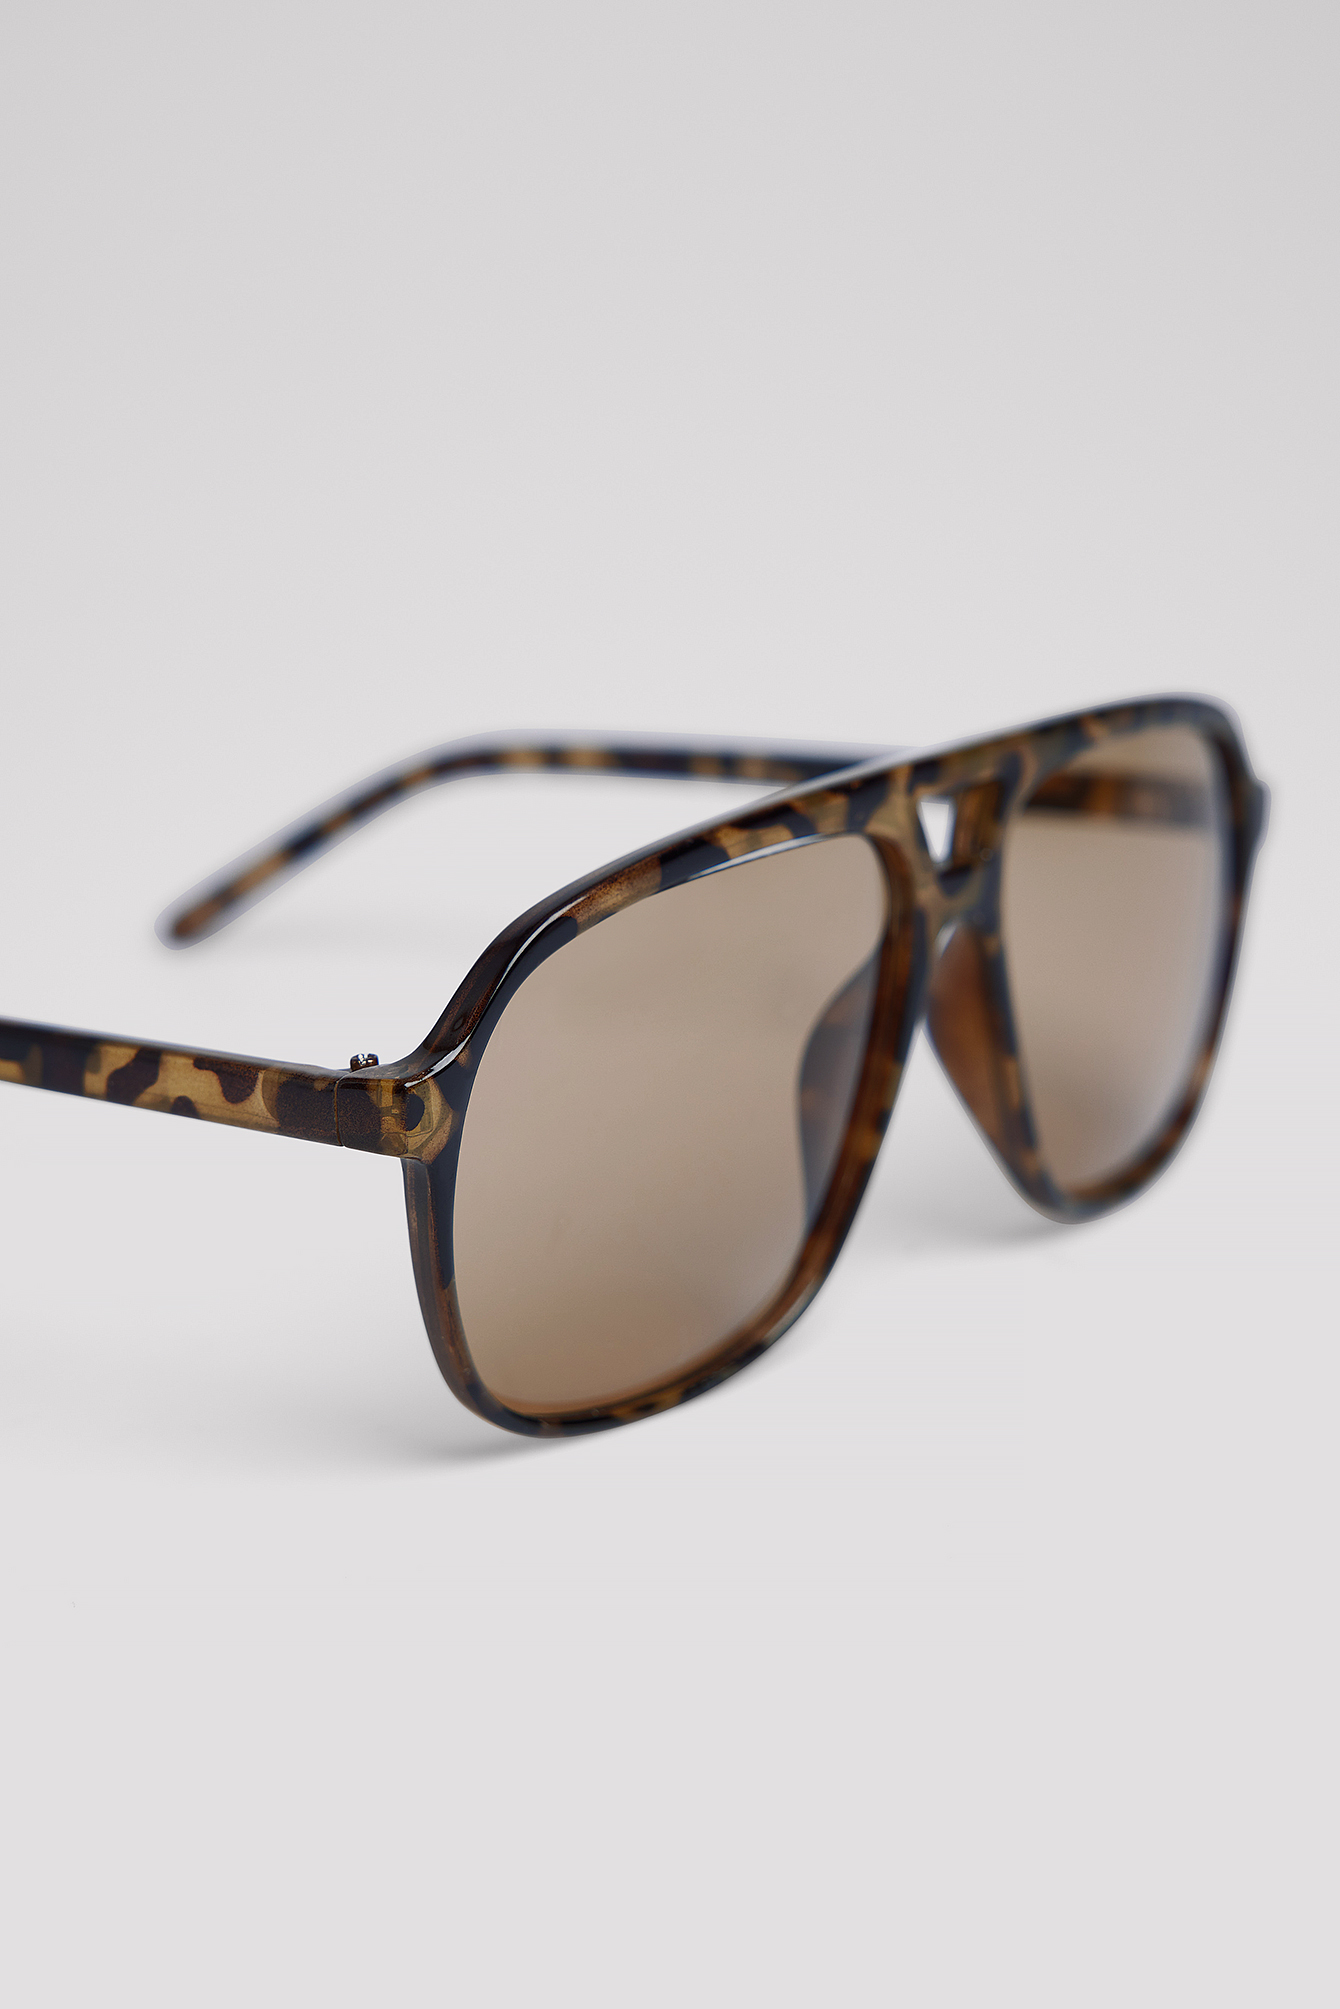 Classic Retro Vintage Aviation Pilot Sunglasses Women Men Big Large  Oversized Frame Luxury Designer Shades 70s Sun Glasses